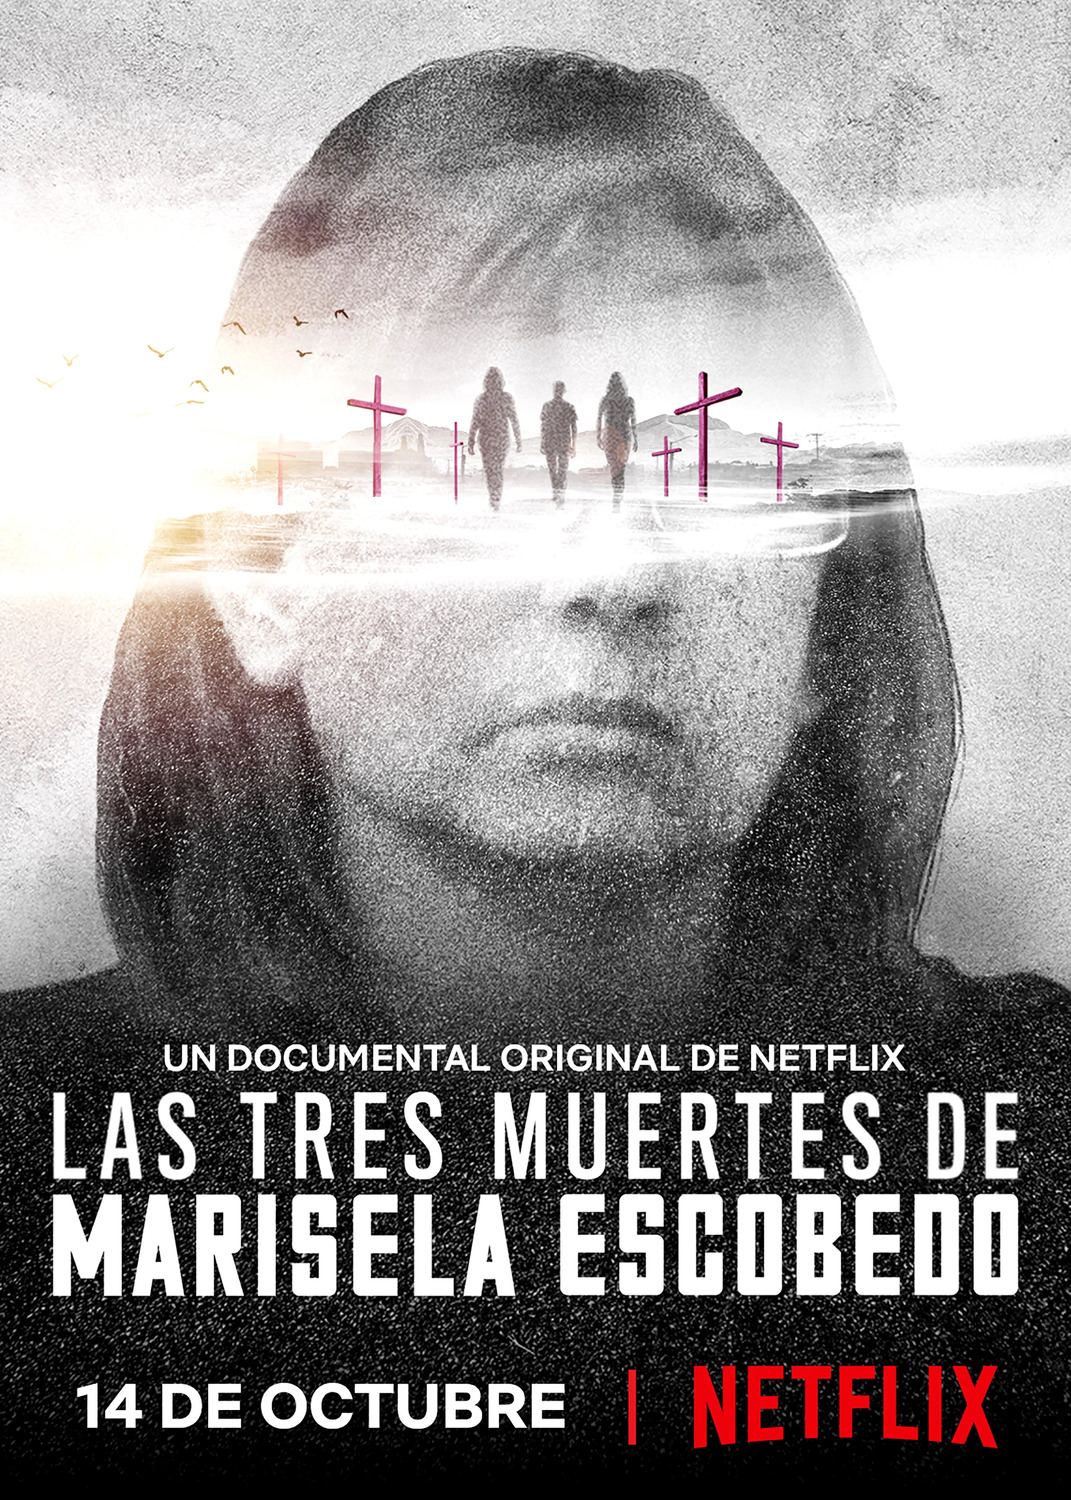 Extra Large TV Poster Image for Las tres muertes de Marisela Escobedo 